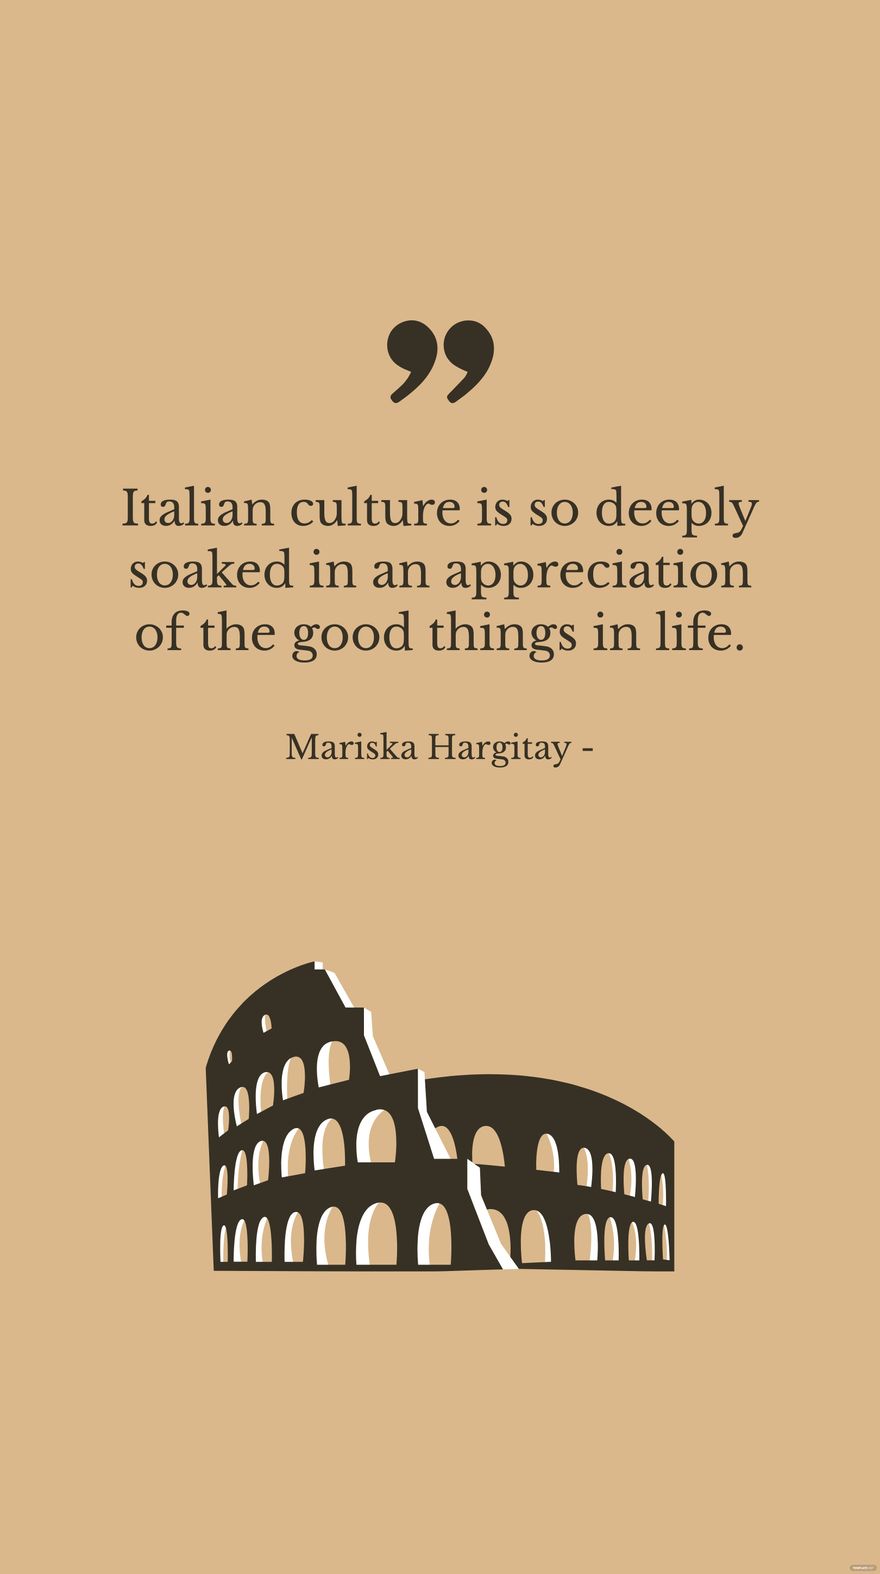 Mariska Hargitay - Italian culture is so deeply soaked in an appreciation of the good things in life.